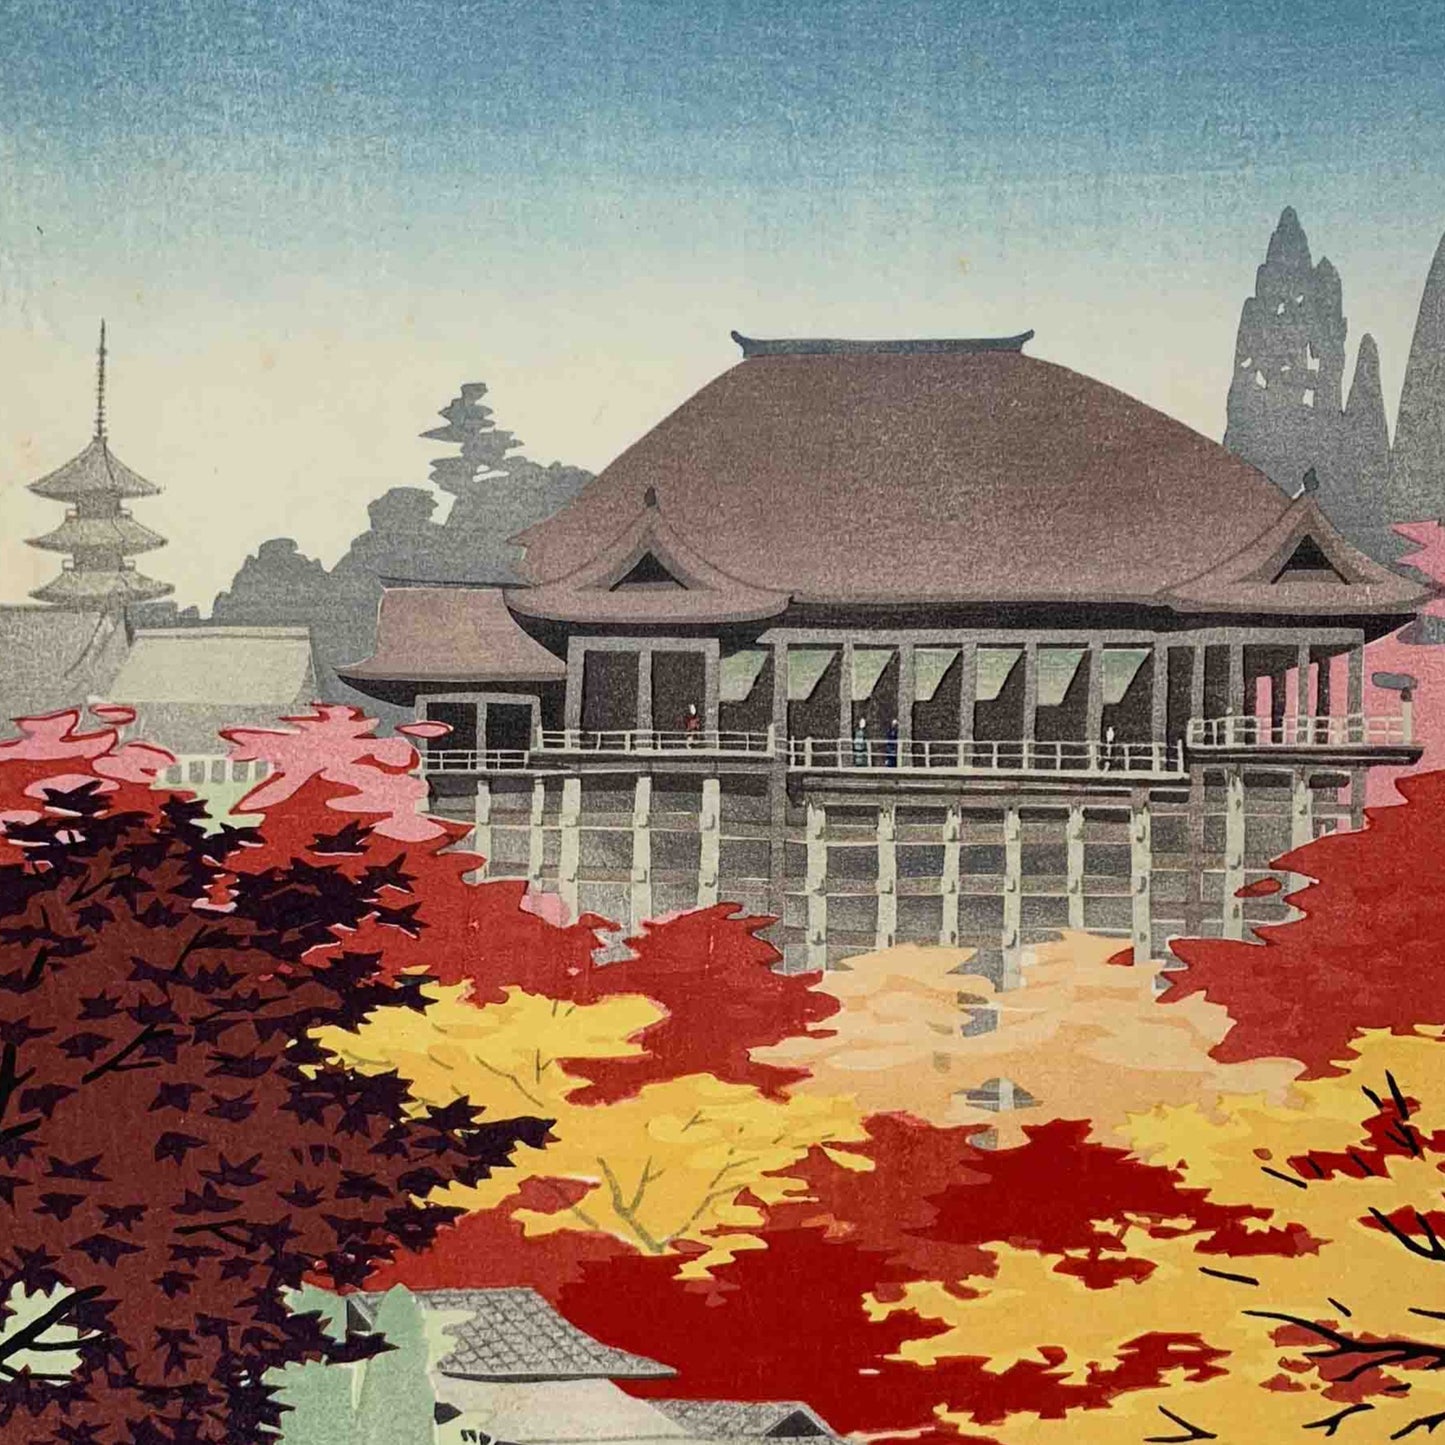 estampe japonaise de kawai kenji kiyomizu a l'automne